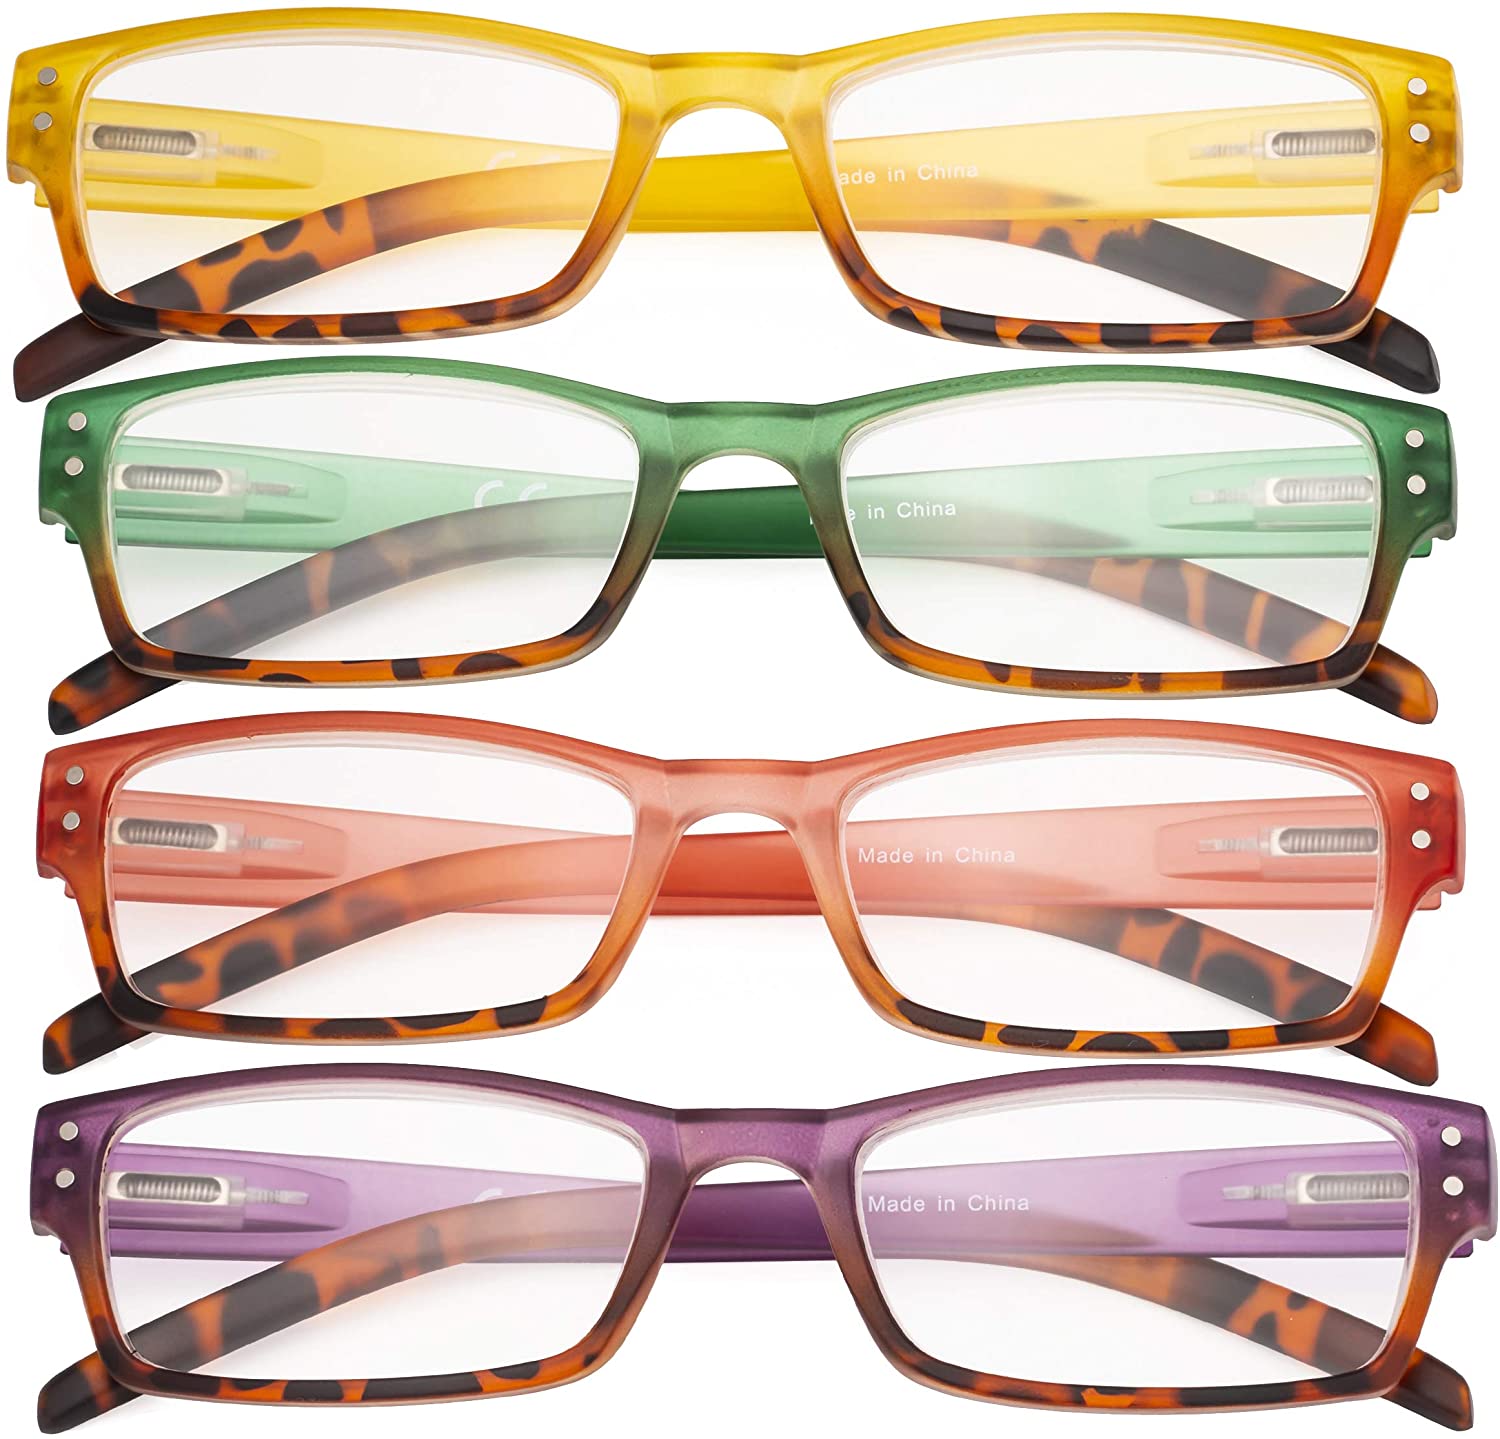 Cessblu Ladies Variety Colors Reading Glasses 4 Pack With Spring Hinge 